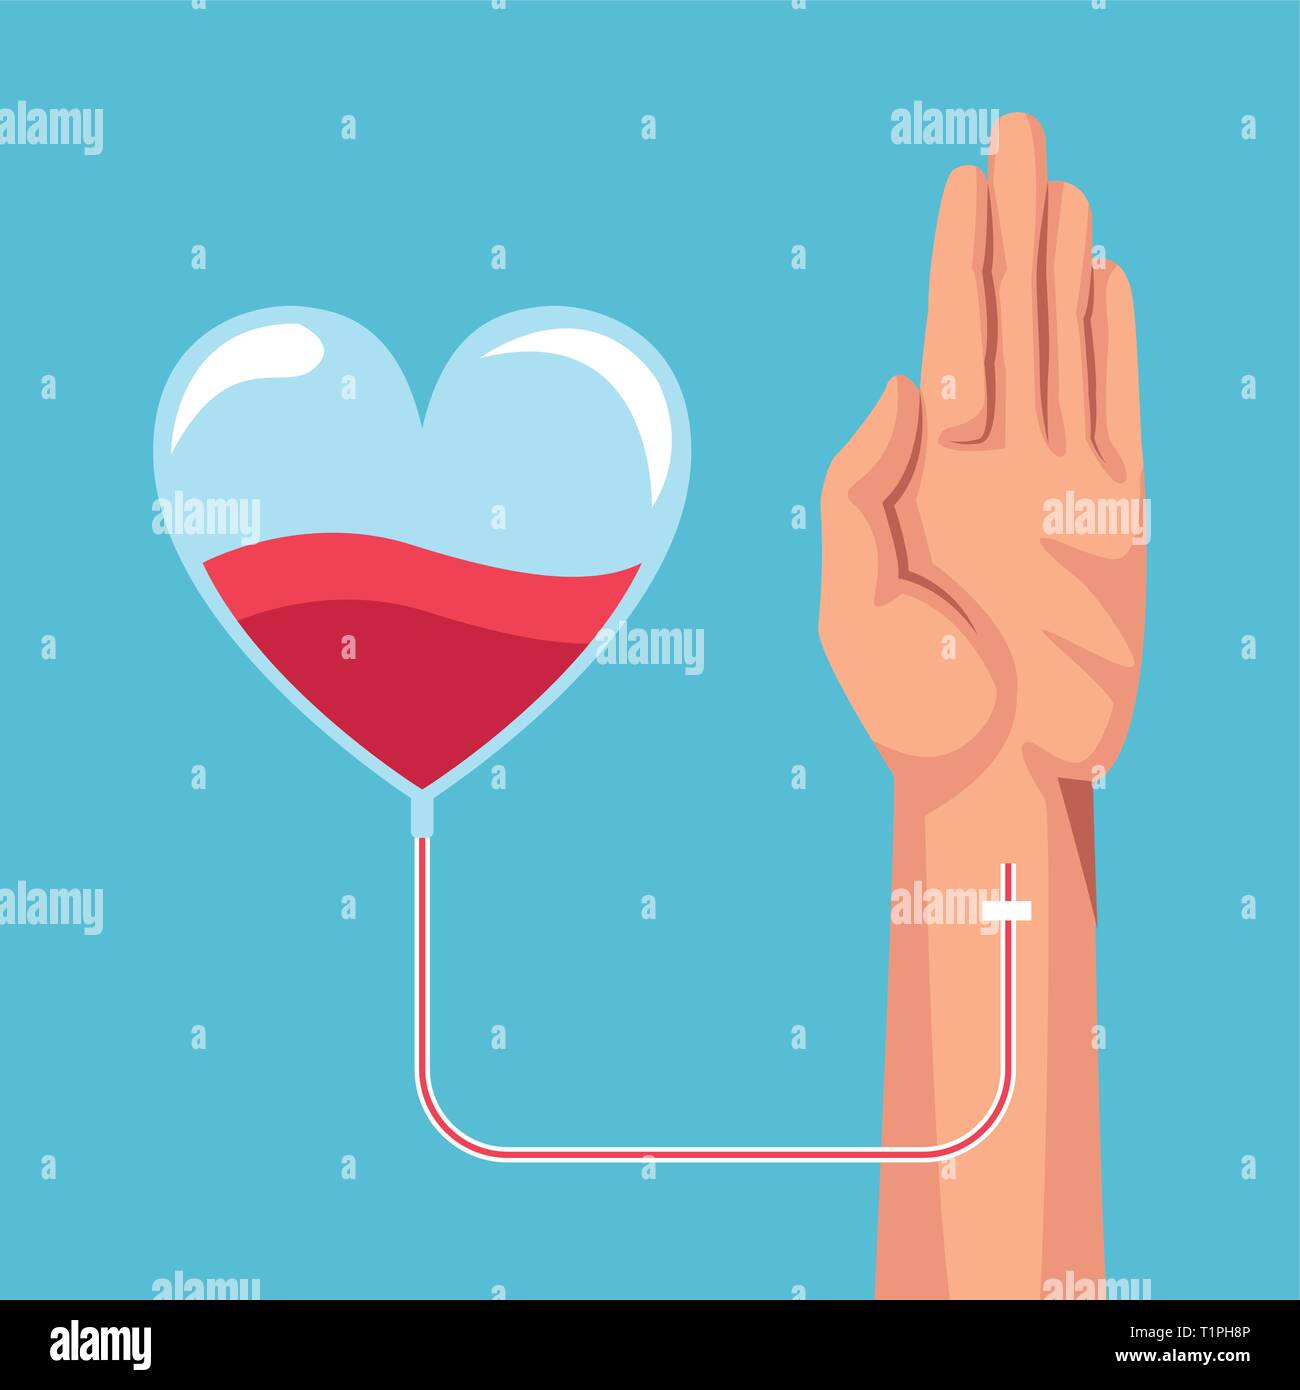 Blood donation charity cartoons Stock Vector